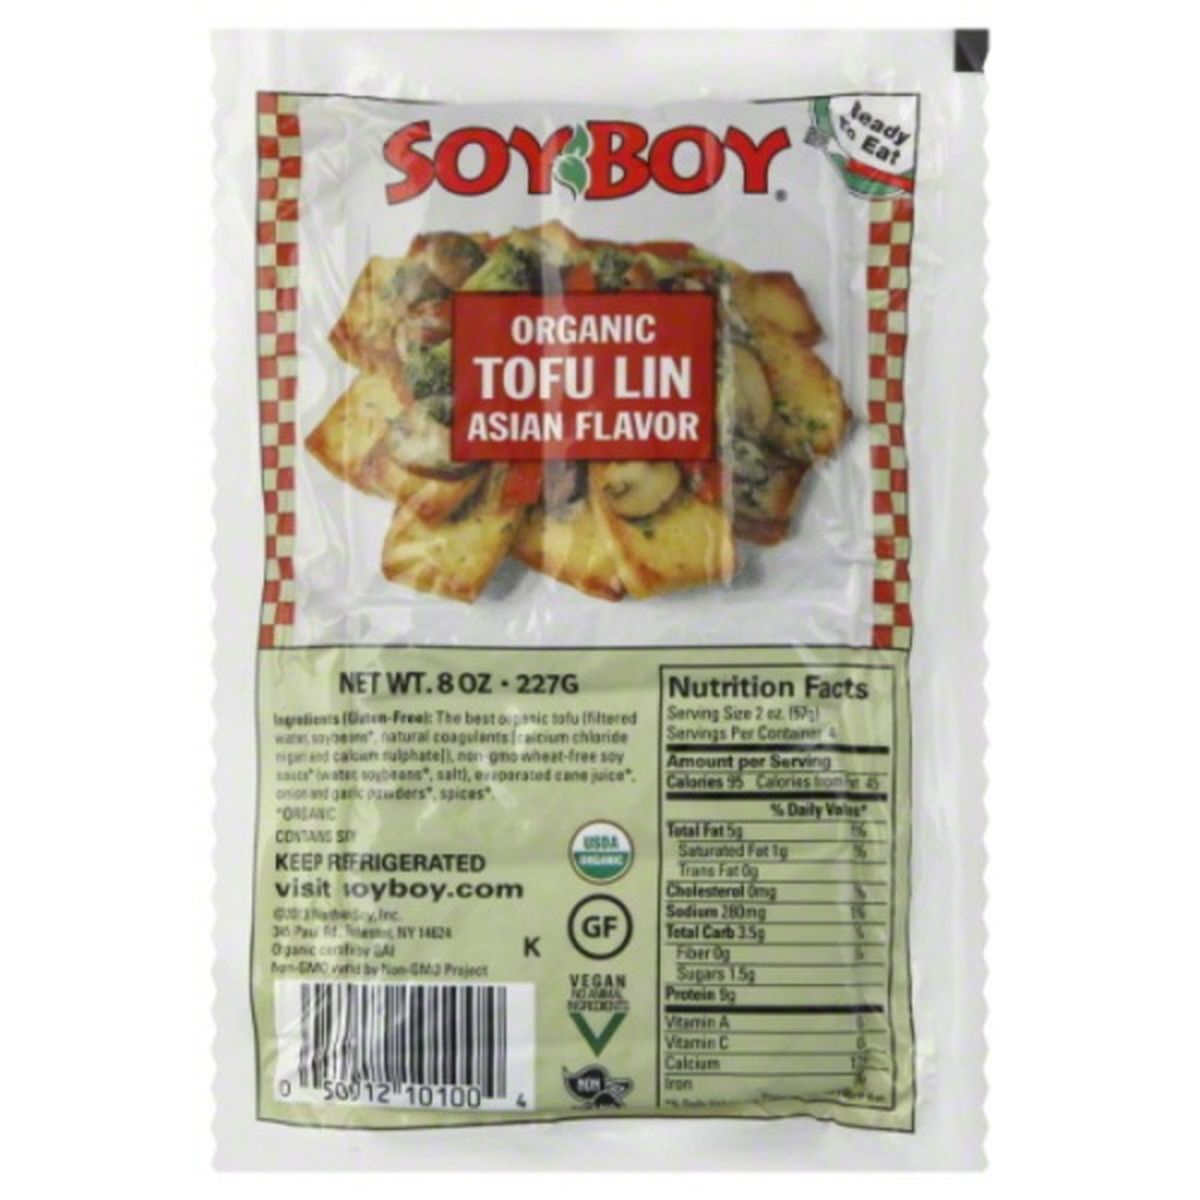 Calories in Soyboy Tofu Lin, Organic, Asian Flavor